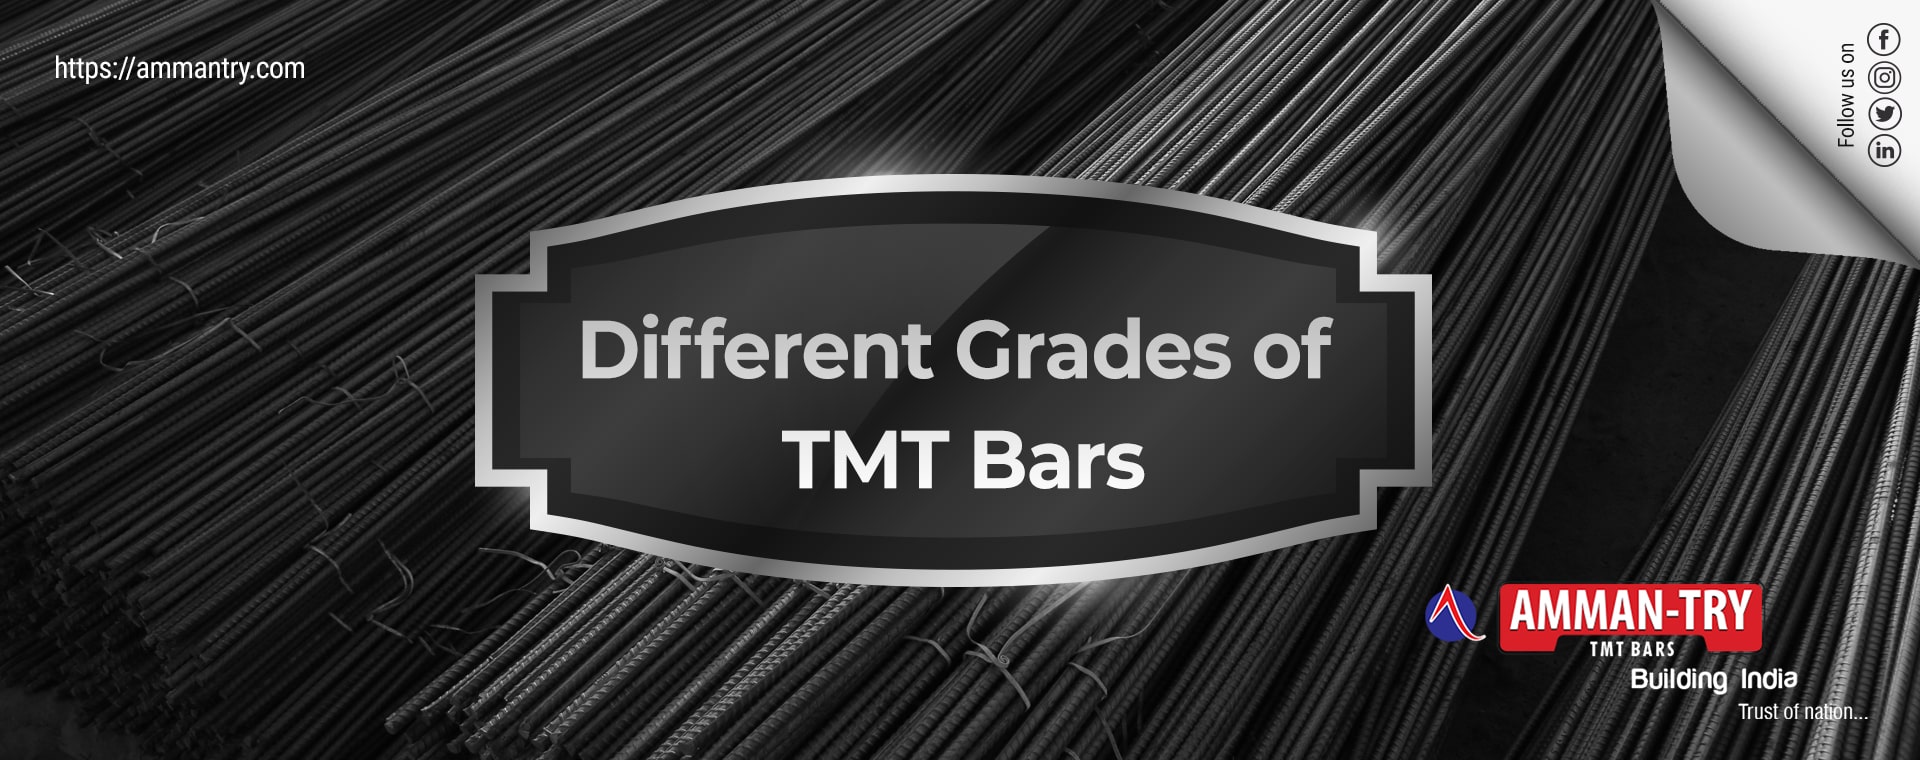 Different Grades of TMT Bars